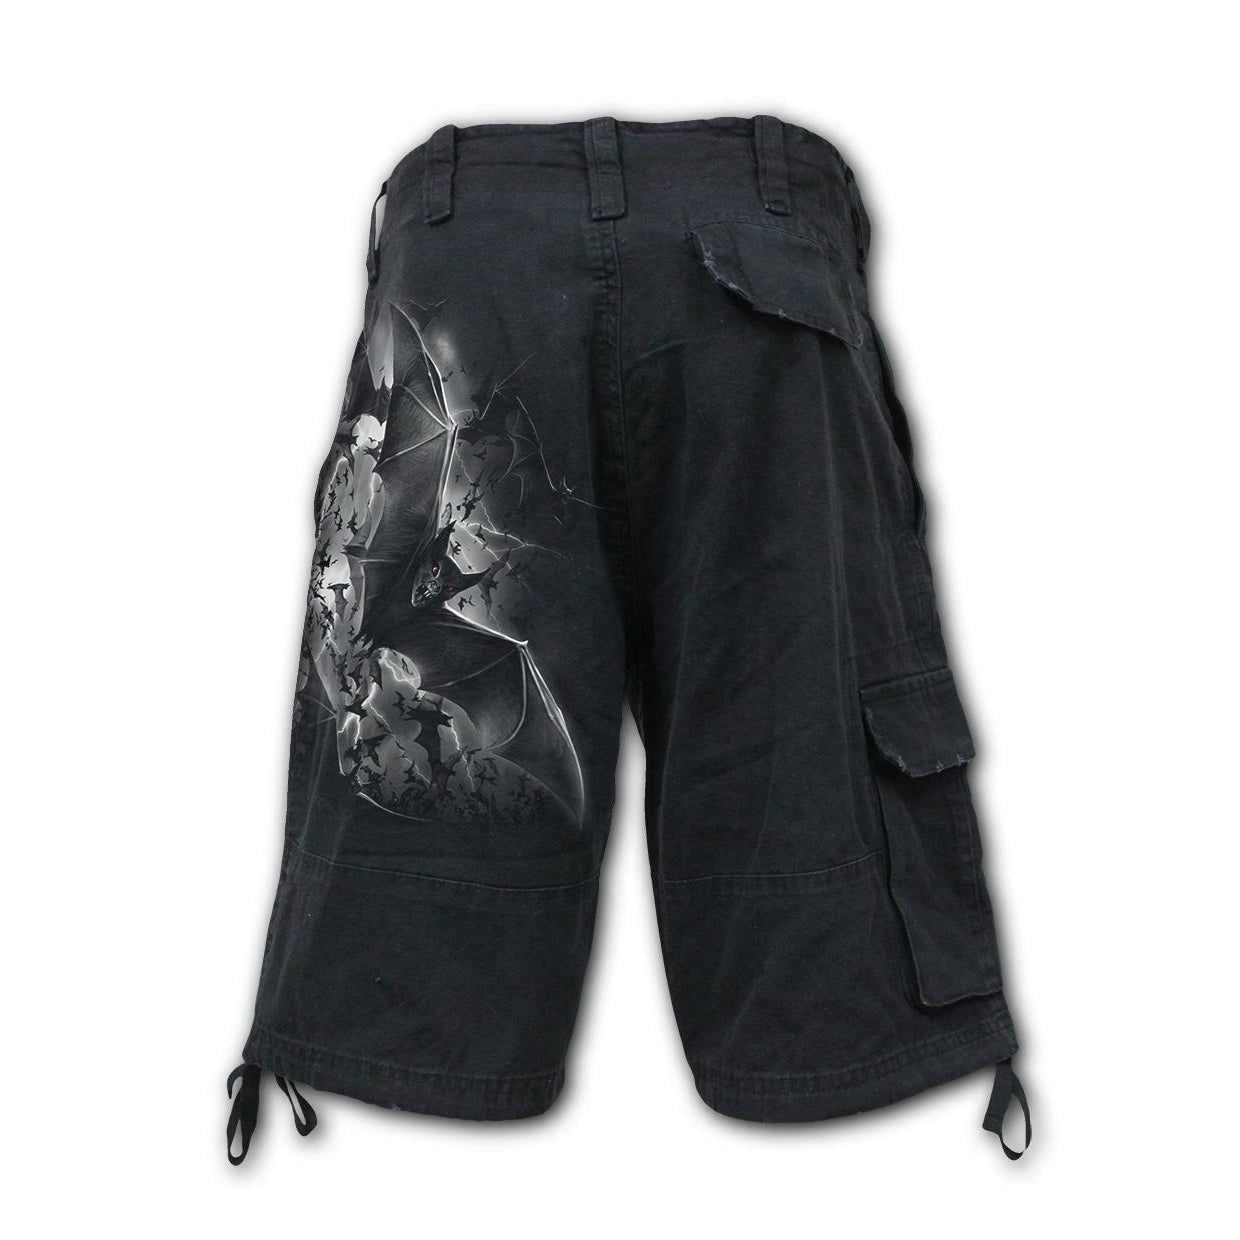 Bat Curse Mens Black Cargo Shorts-Mens Shorts & Pants-Scarlett Dawn